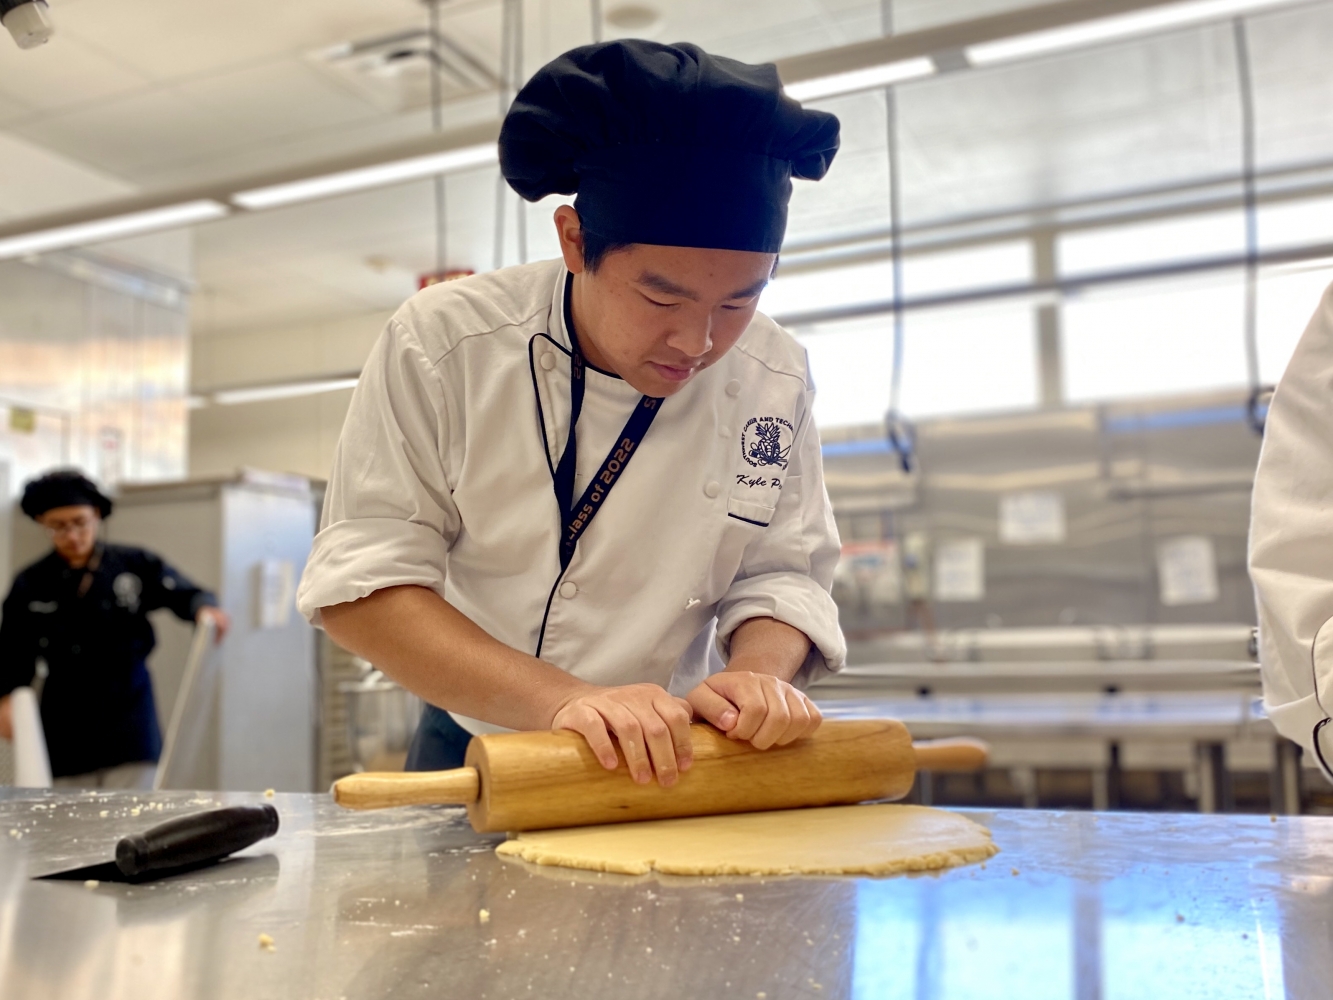 Accomplished Cook: Meet Kyle Peng